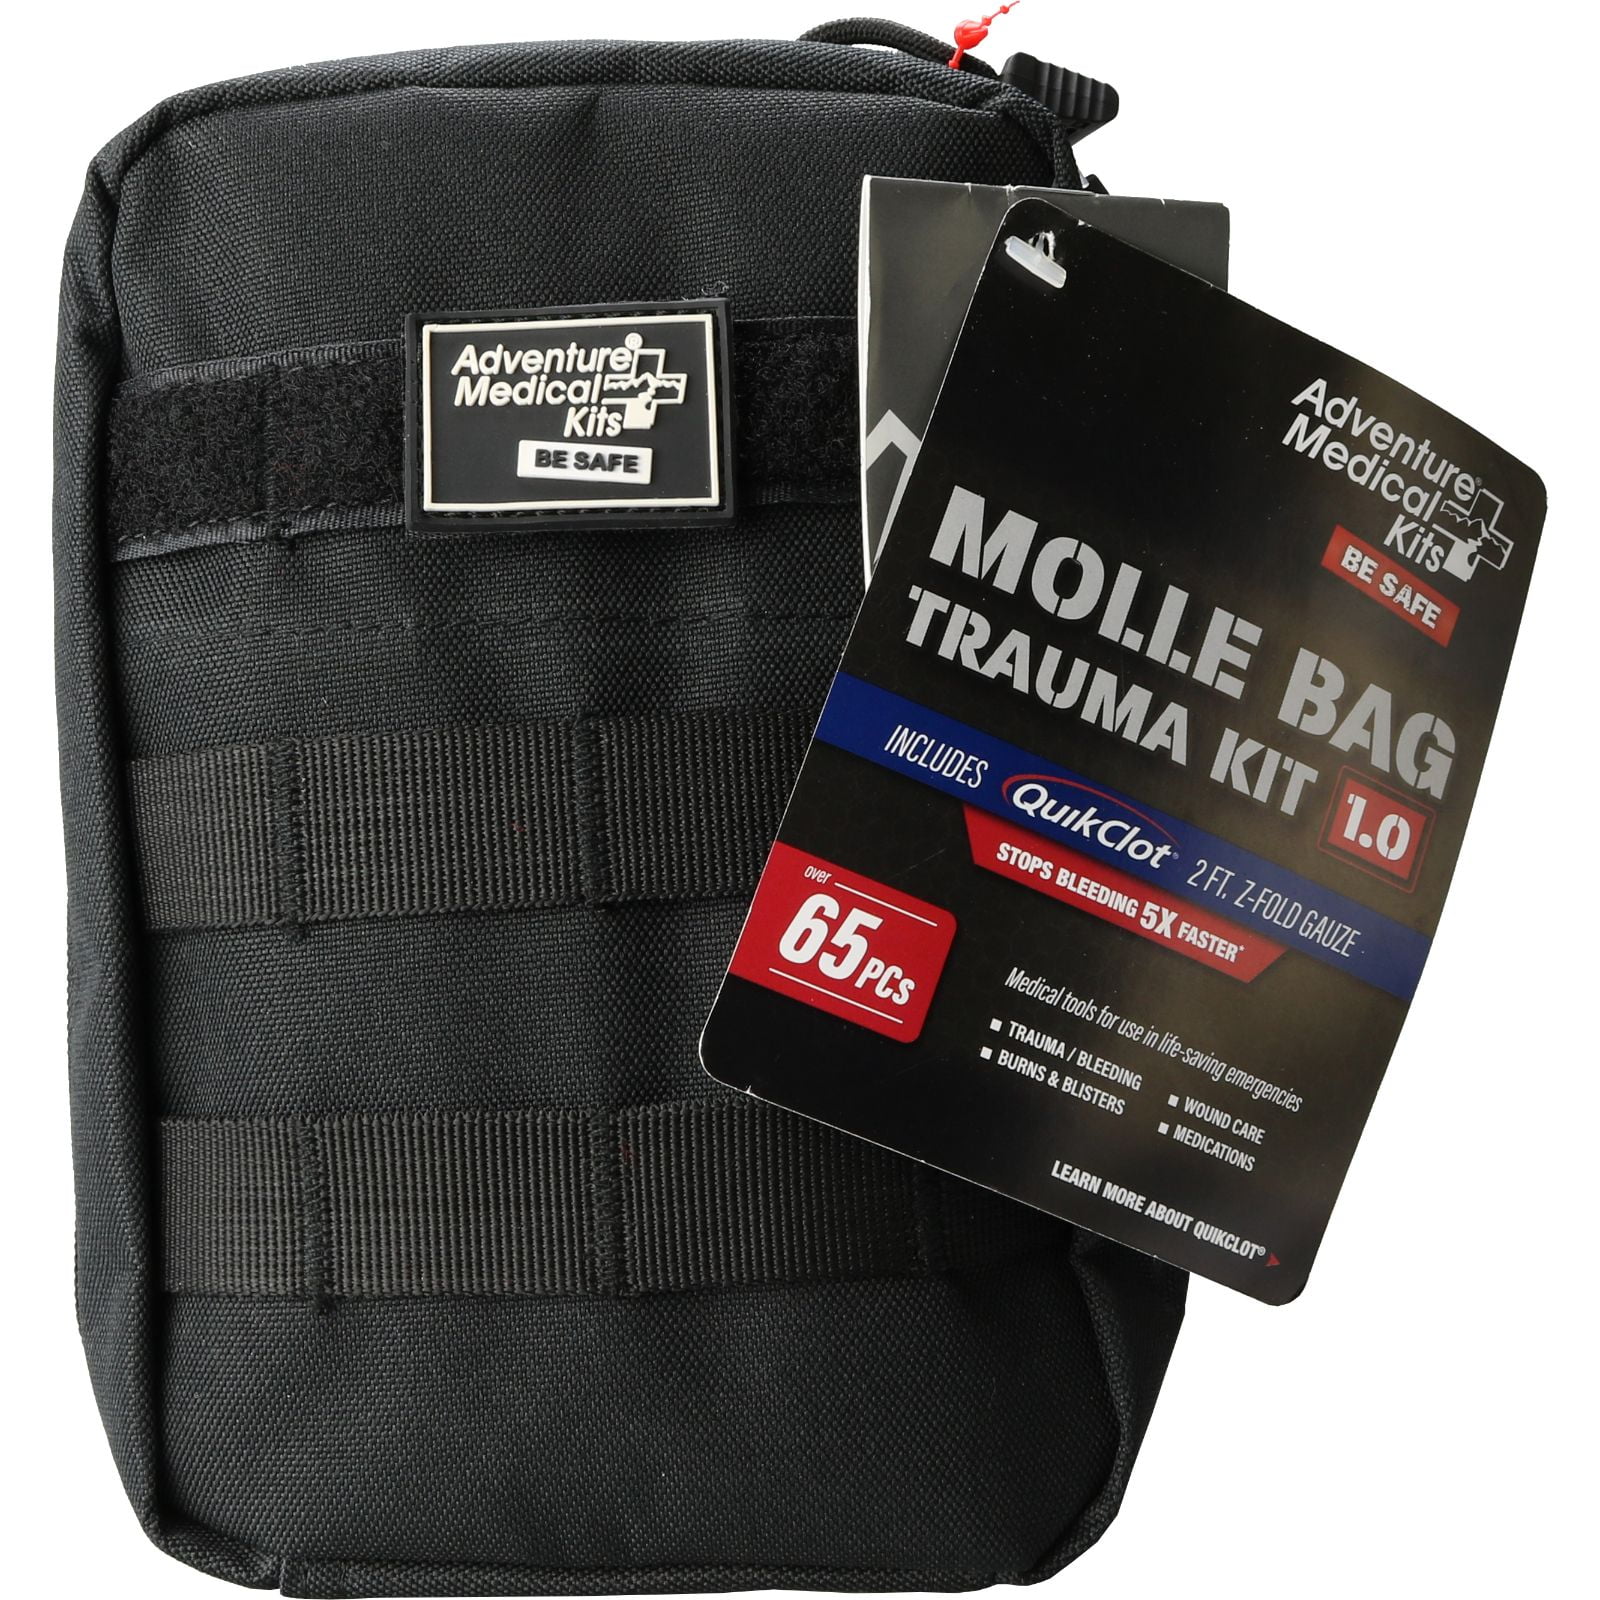 Adventure Medical Kits Molle Bag Trauma Kit 1.0 First Aid Kit, 65 Piece 